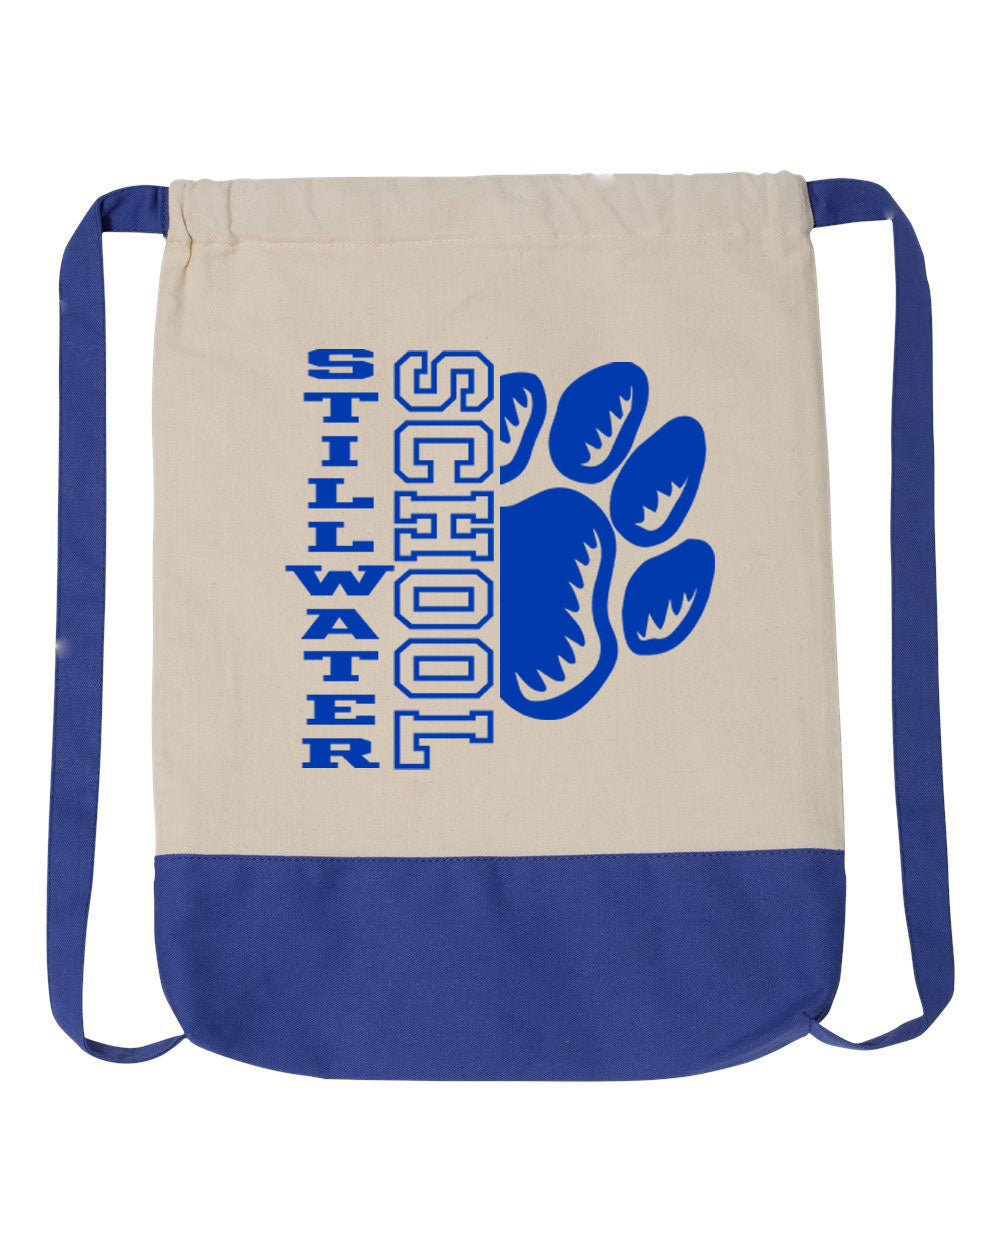 Stillwater School design 17 Drawstring Bag